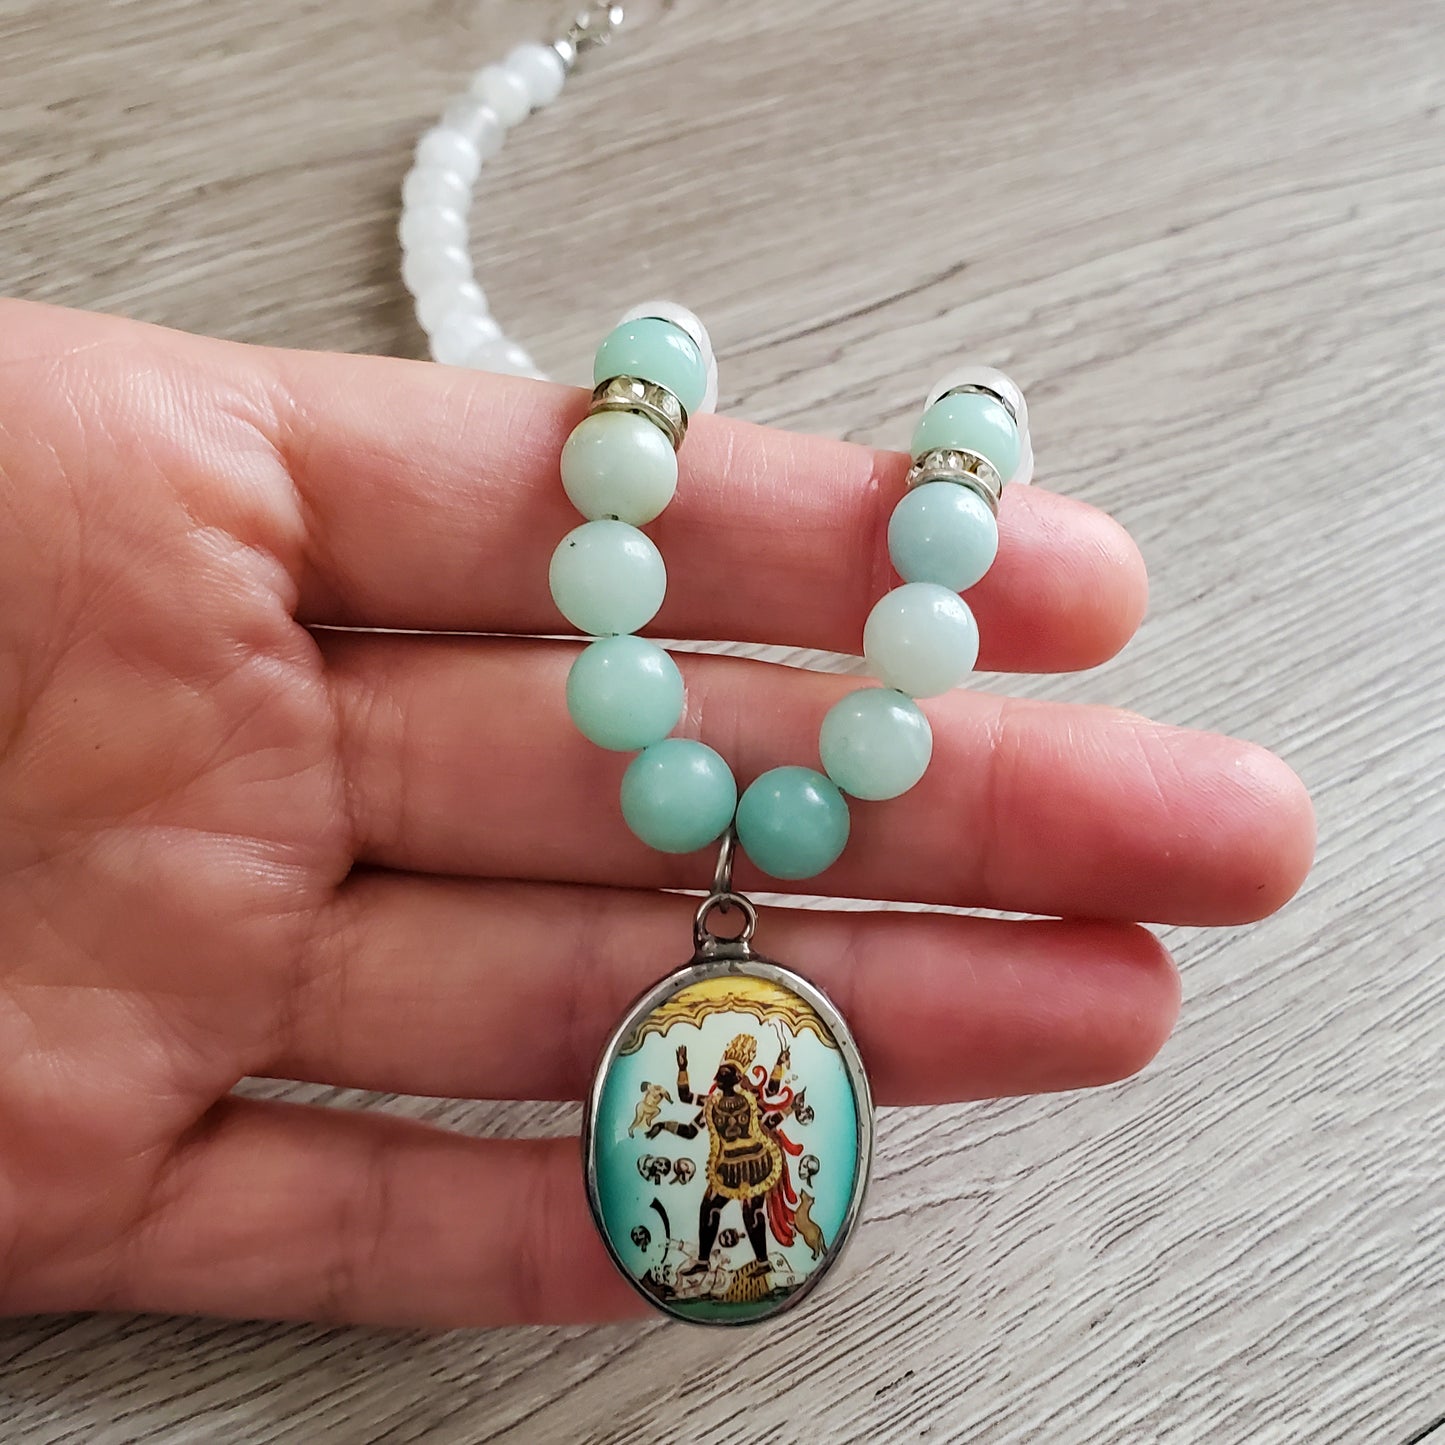 Goddess Kali Moonstone Necklace | Crystal Beads | Handmade Jewlery 17.5" Long